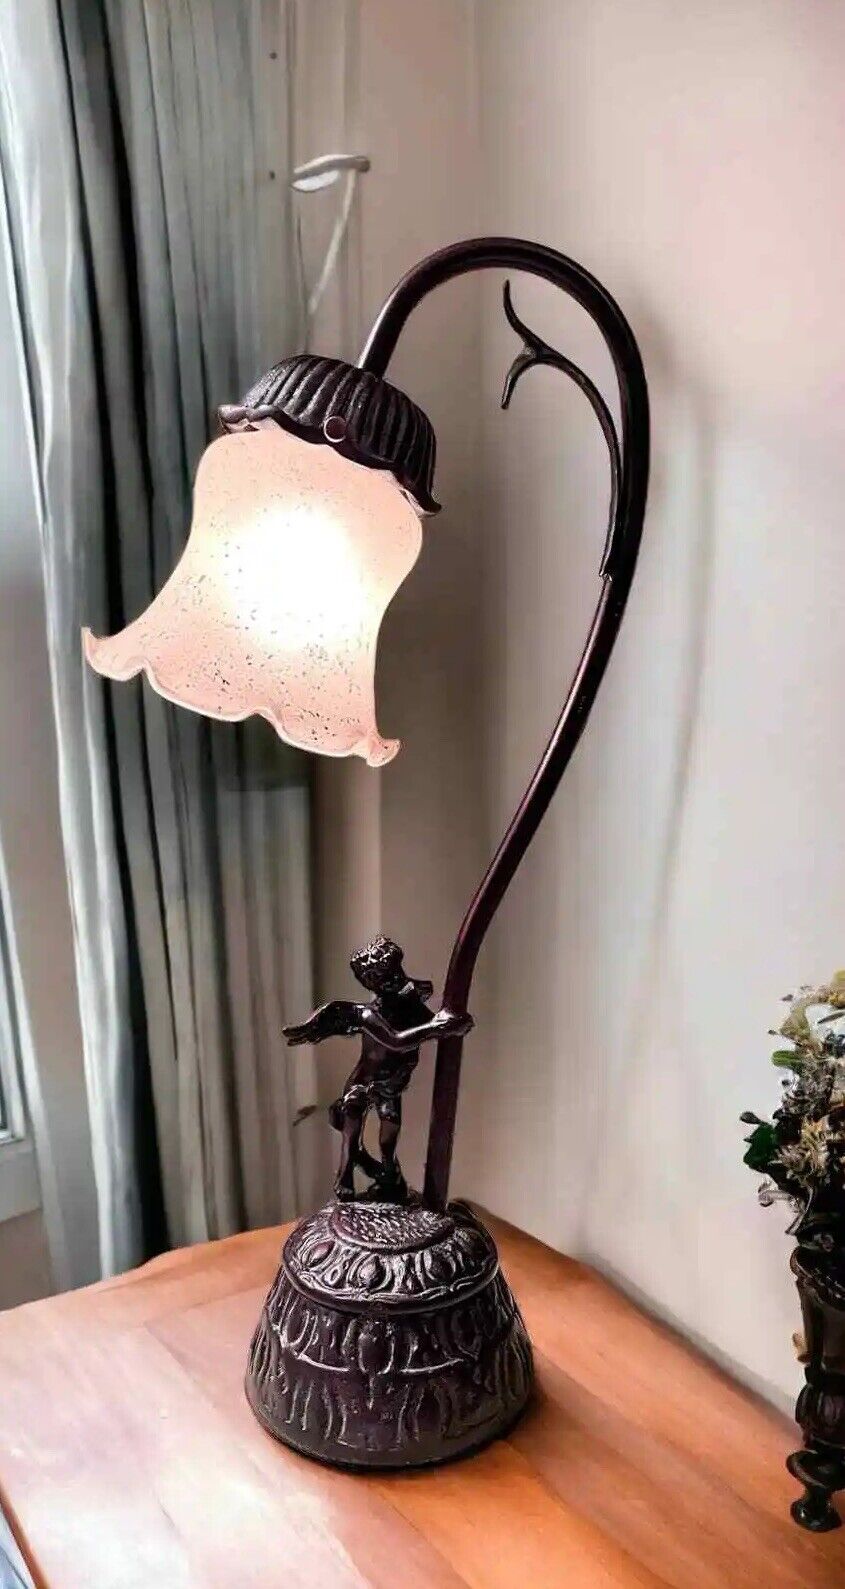 Vintage cherub decorative table lamp